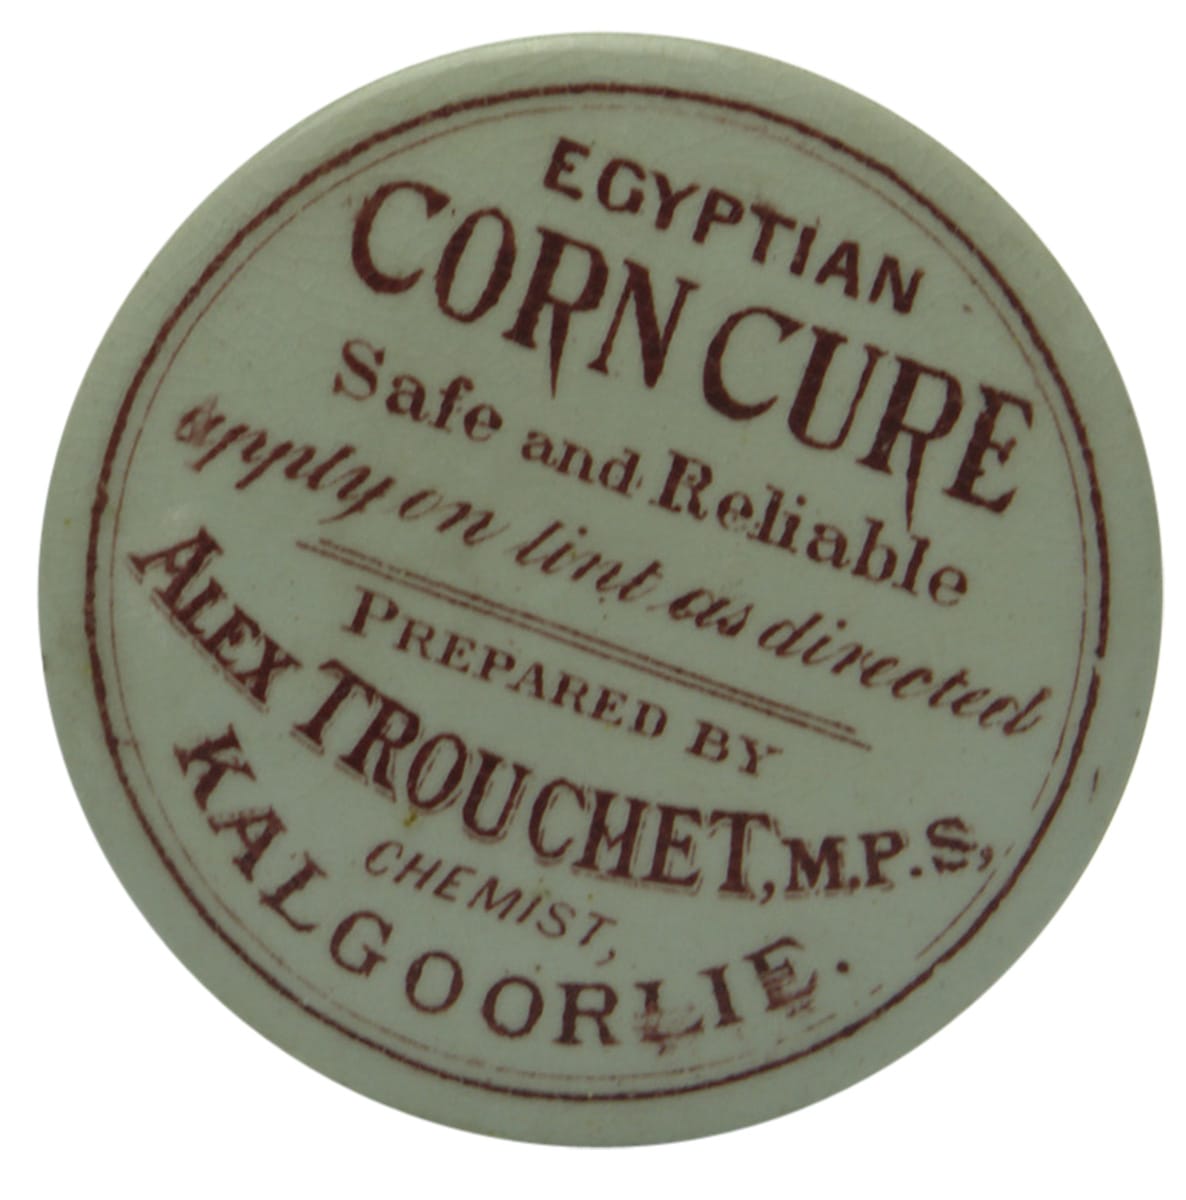 Alex Trouchet Kalgoorlie Egyptian Corn Cure Potlid